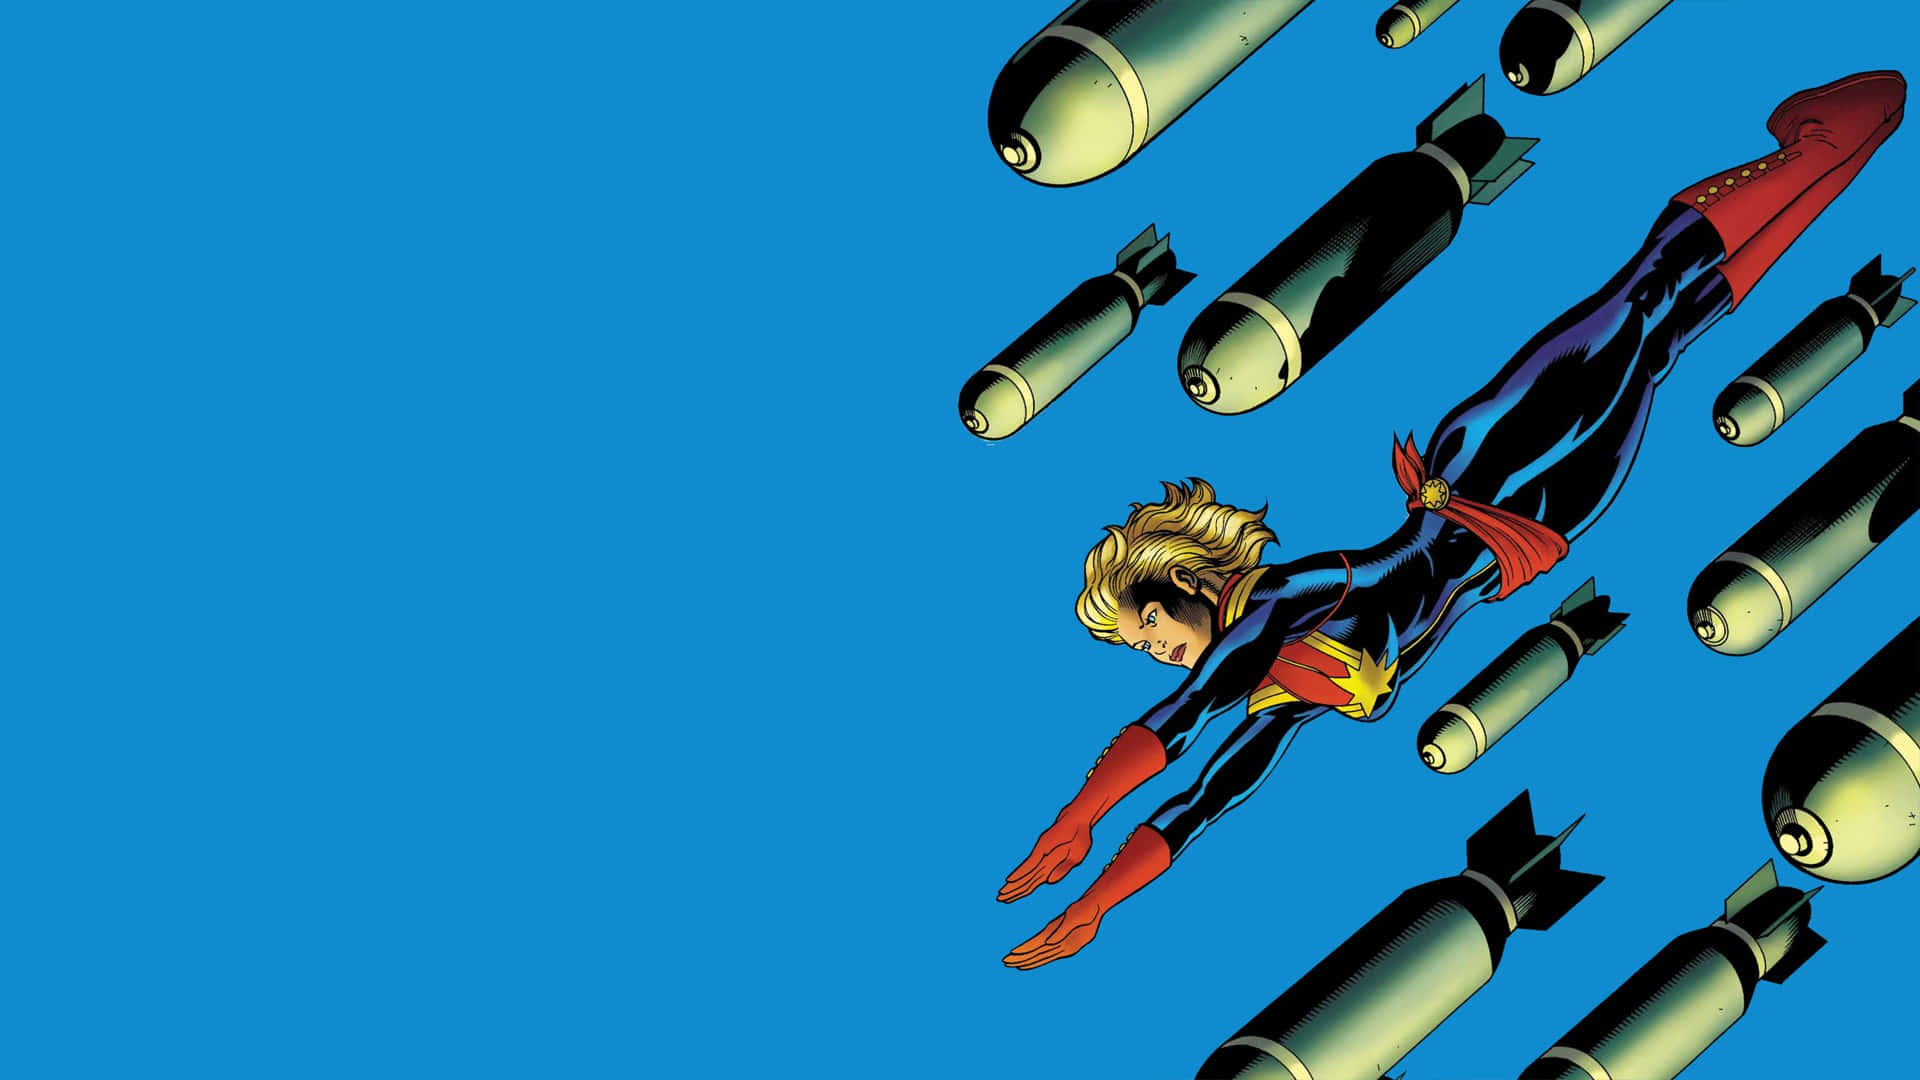 Captain Marvel Soaring Among Missiles Wallpaper